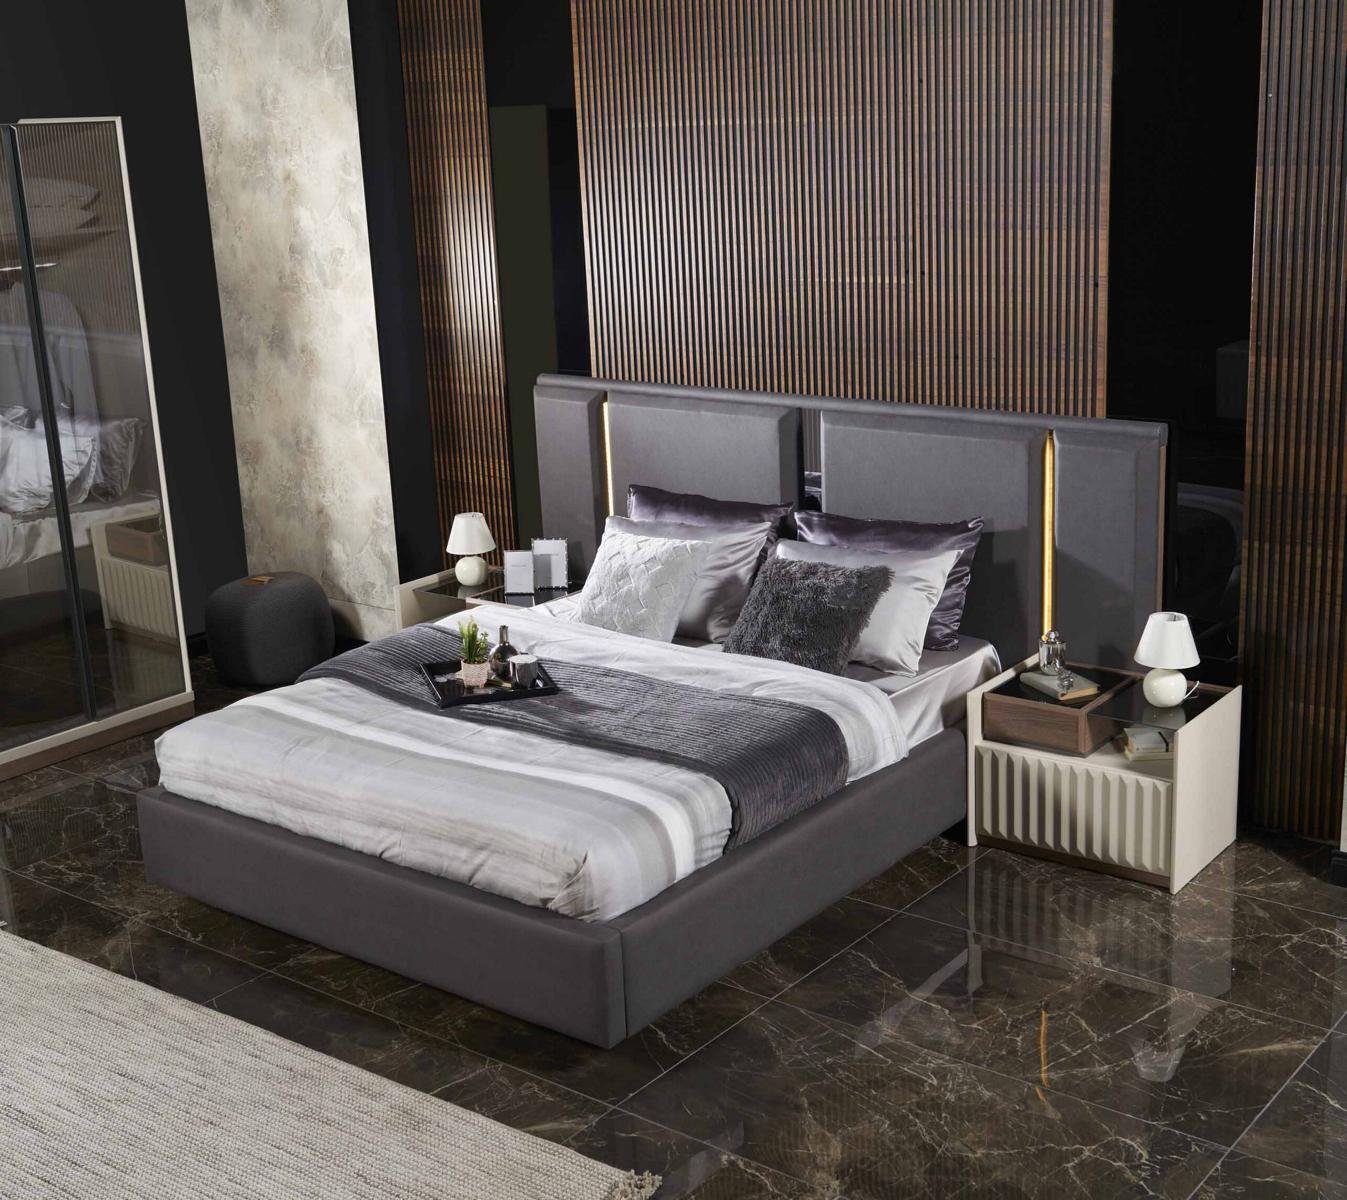 Luxus (Bett), Polster Schlafzimmer JVmoebel Doppel Bett Design Bett In 180x200cm Europe Made Hotel